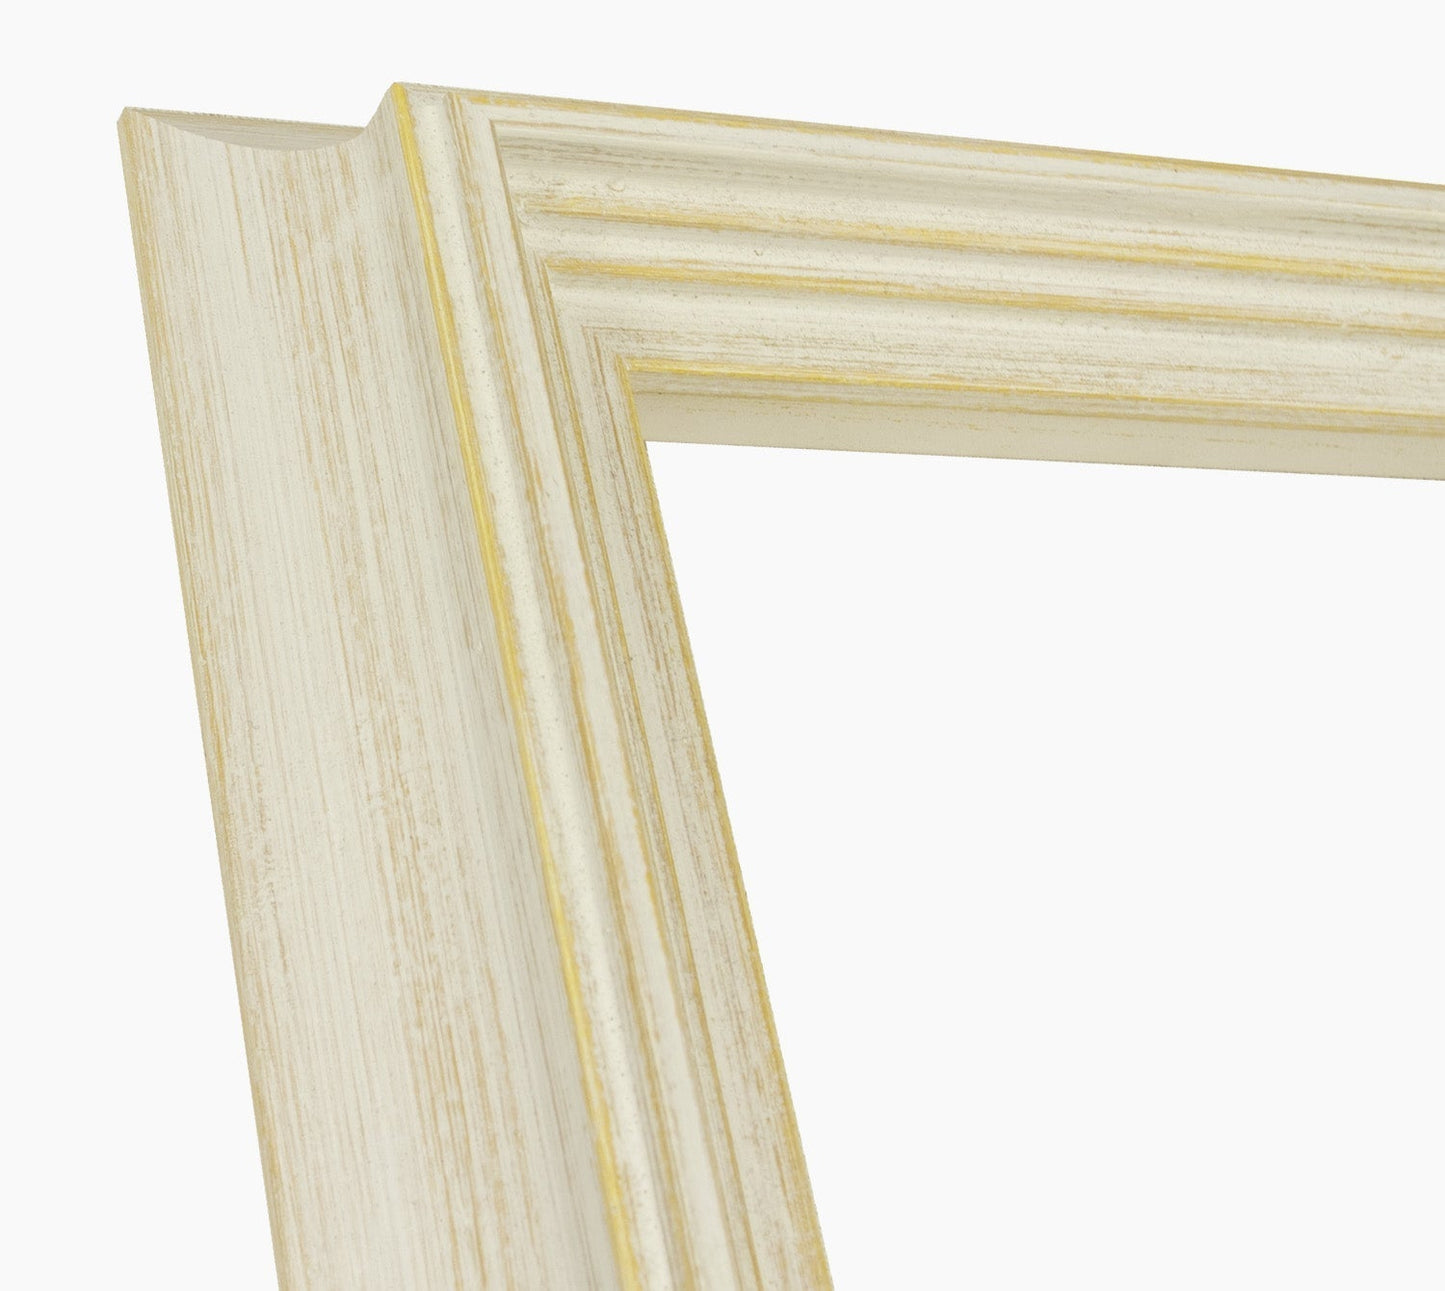 447.915 cadre en bois à fond ocre blanc mesure de profil 65x55 mm Lombarda cornici S.n.c.